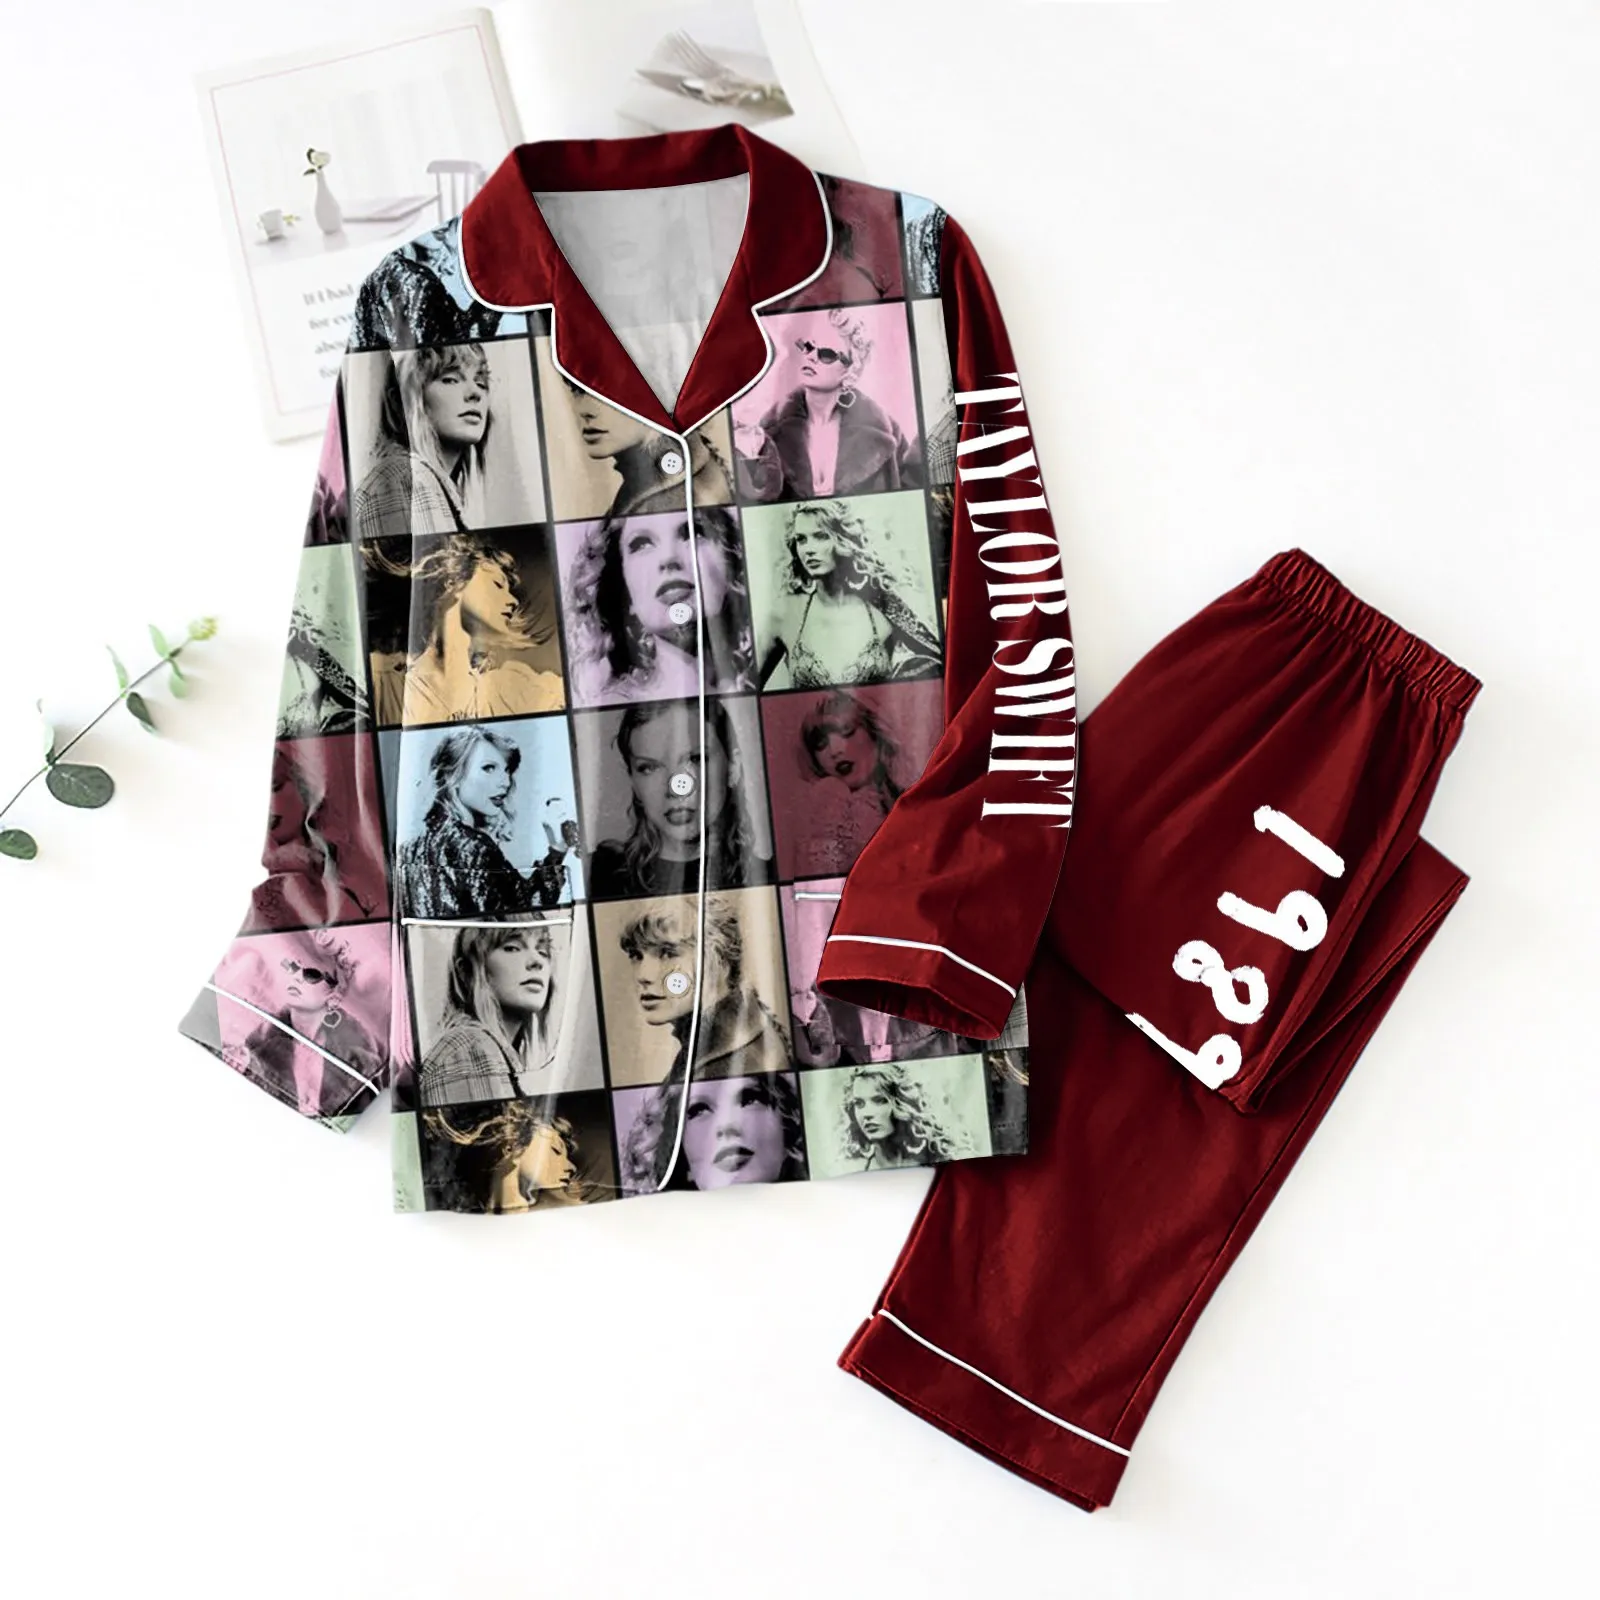 

1989 Ts Dlx Shirts&Trousers Sleepwear Set Long-Sleeve Pants T-Shirt Swift Print Matching-Set Pijama-Set Home-Wear Lounge Pajamas